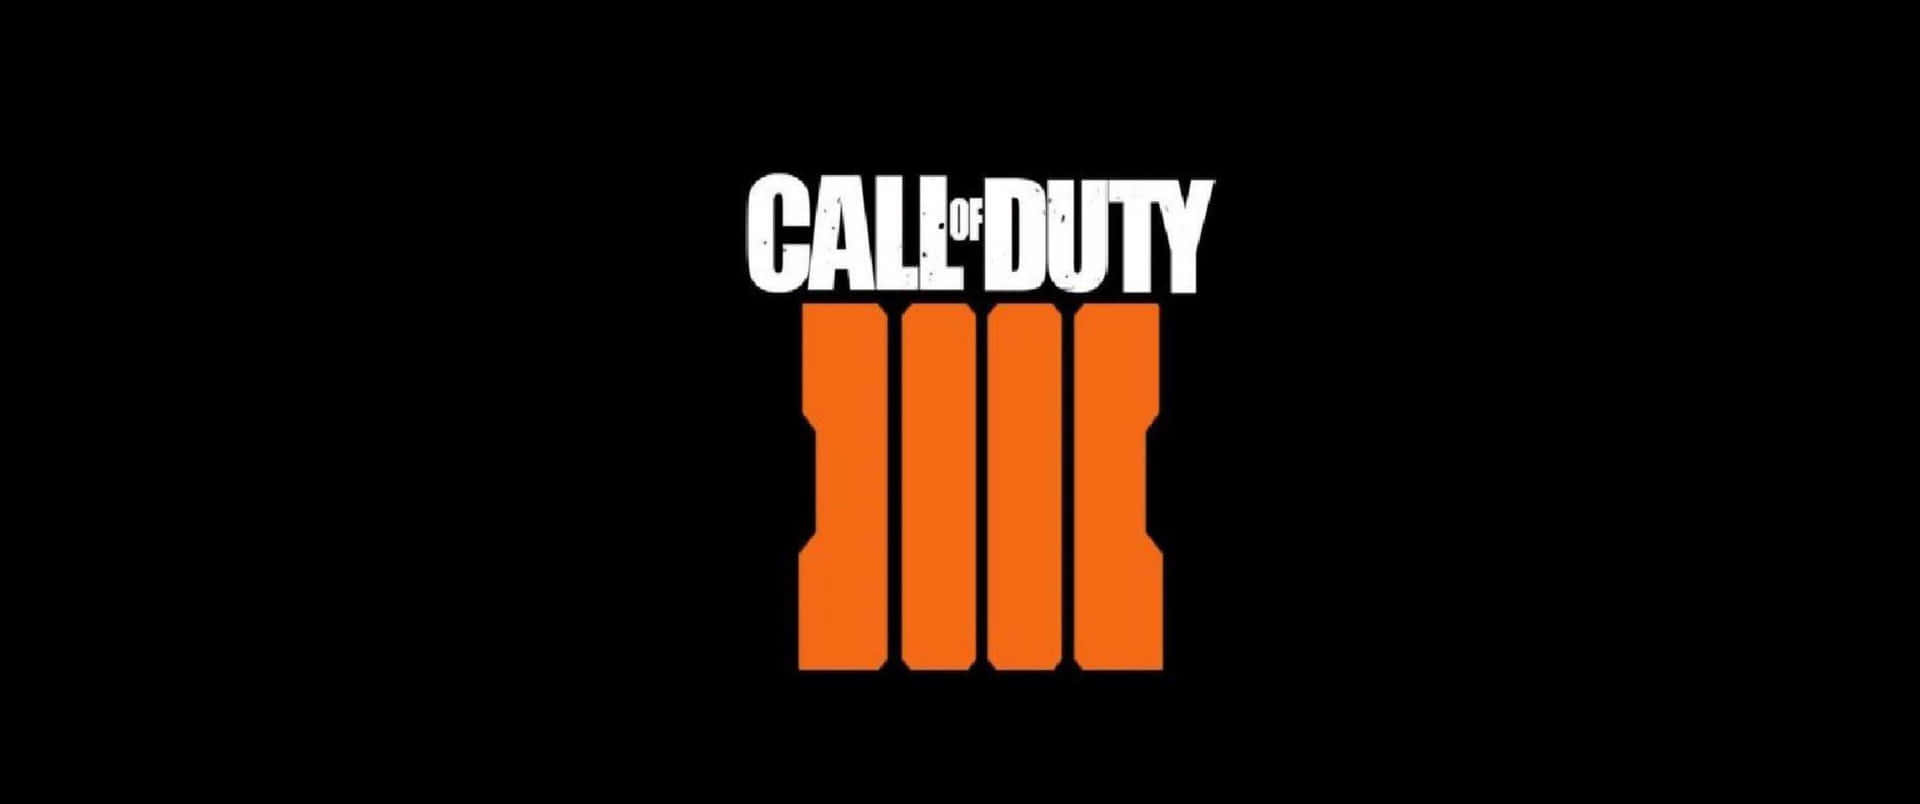 Call Of Duty Iii Logo On A Black Background